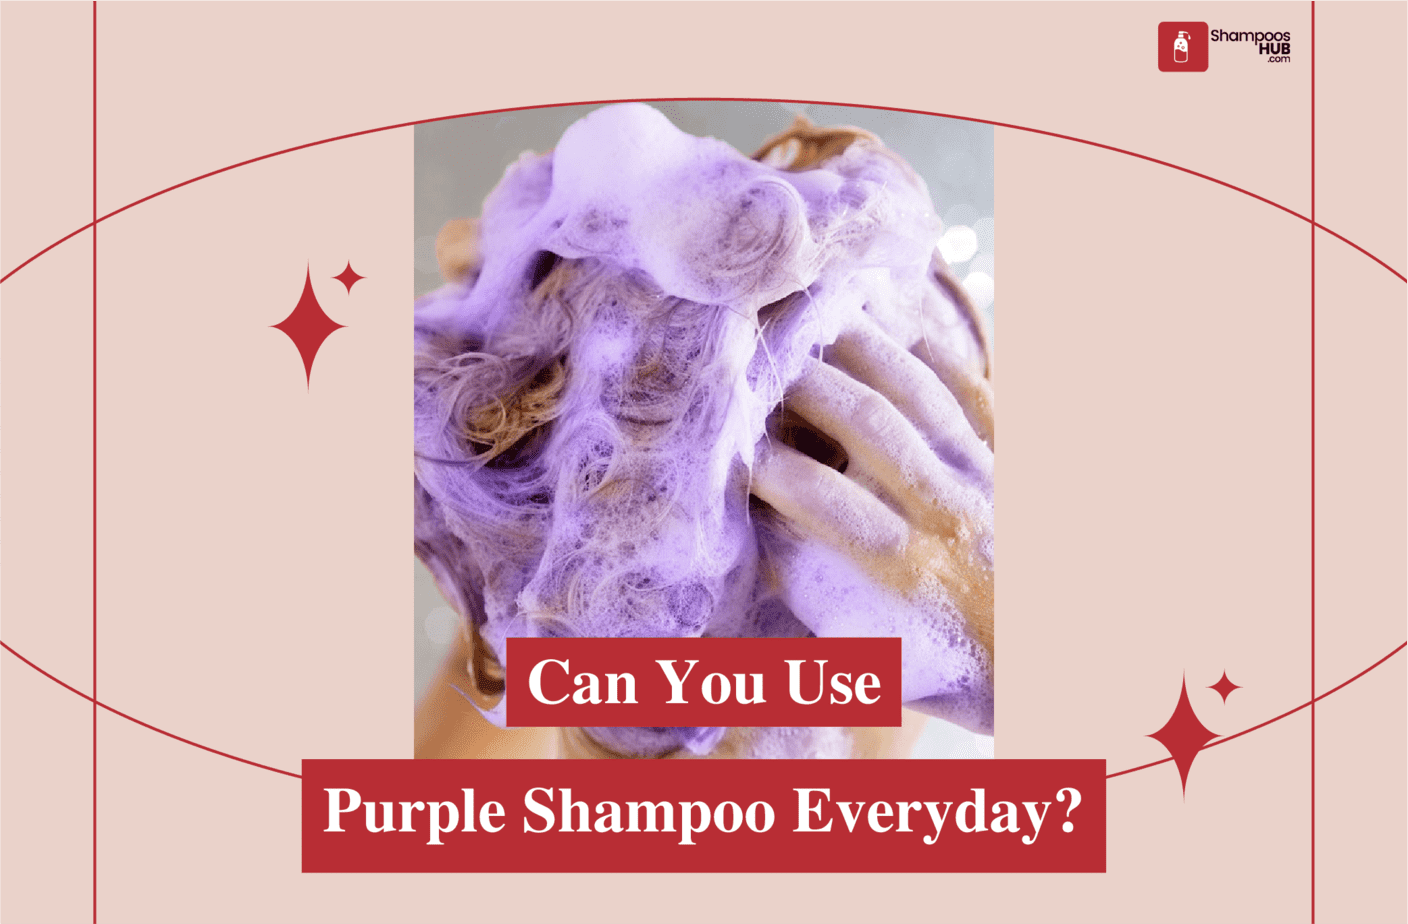 Can You Use Purple Shampoo Everyday?